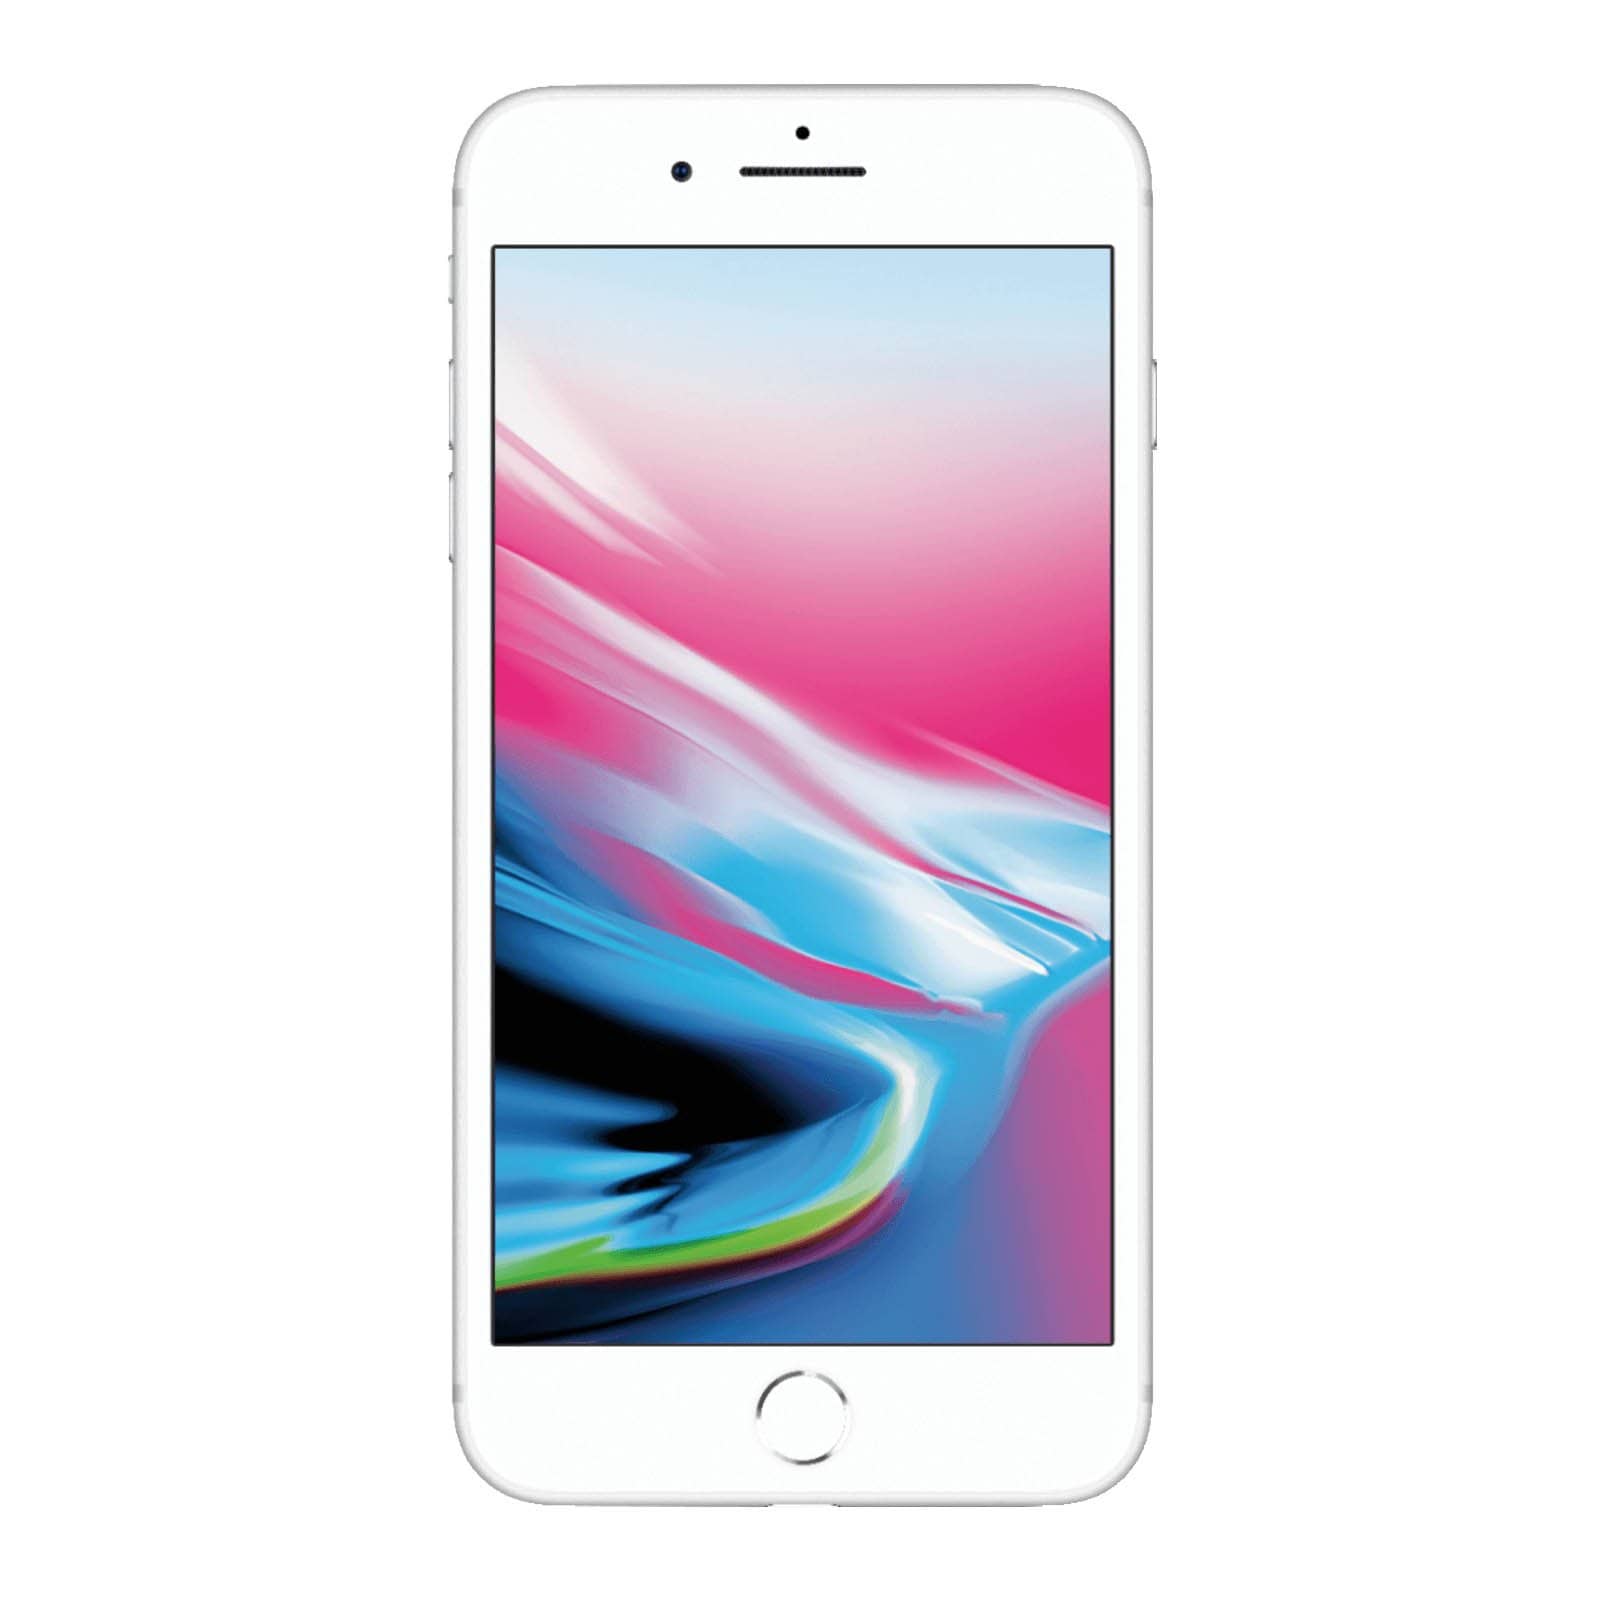 Apple iPhone 8 64GB Silver Very Good - Unlocked